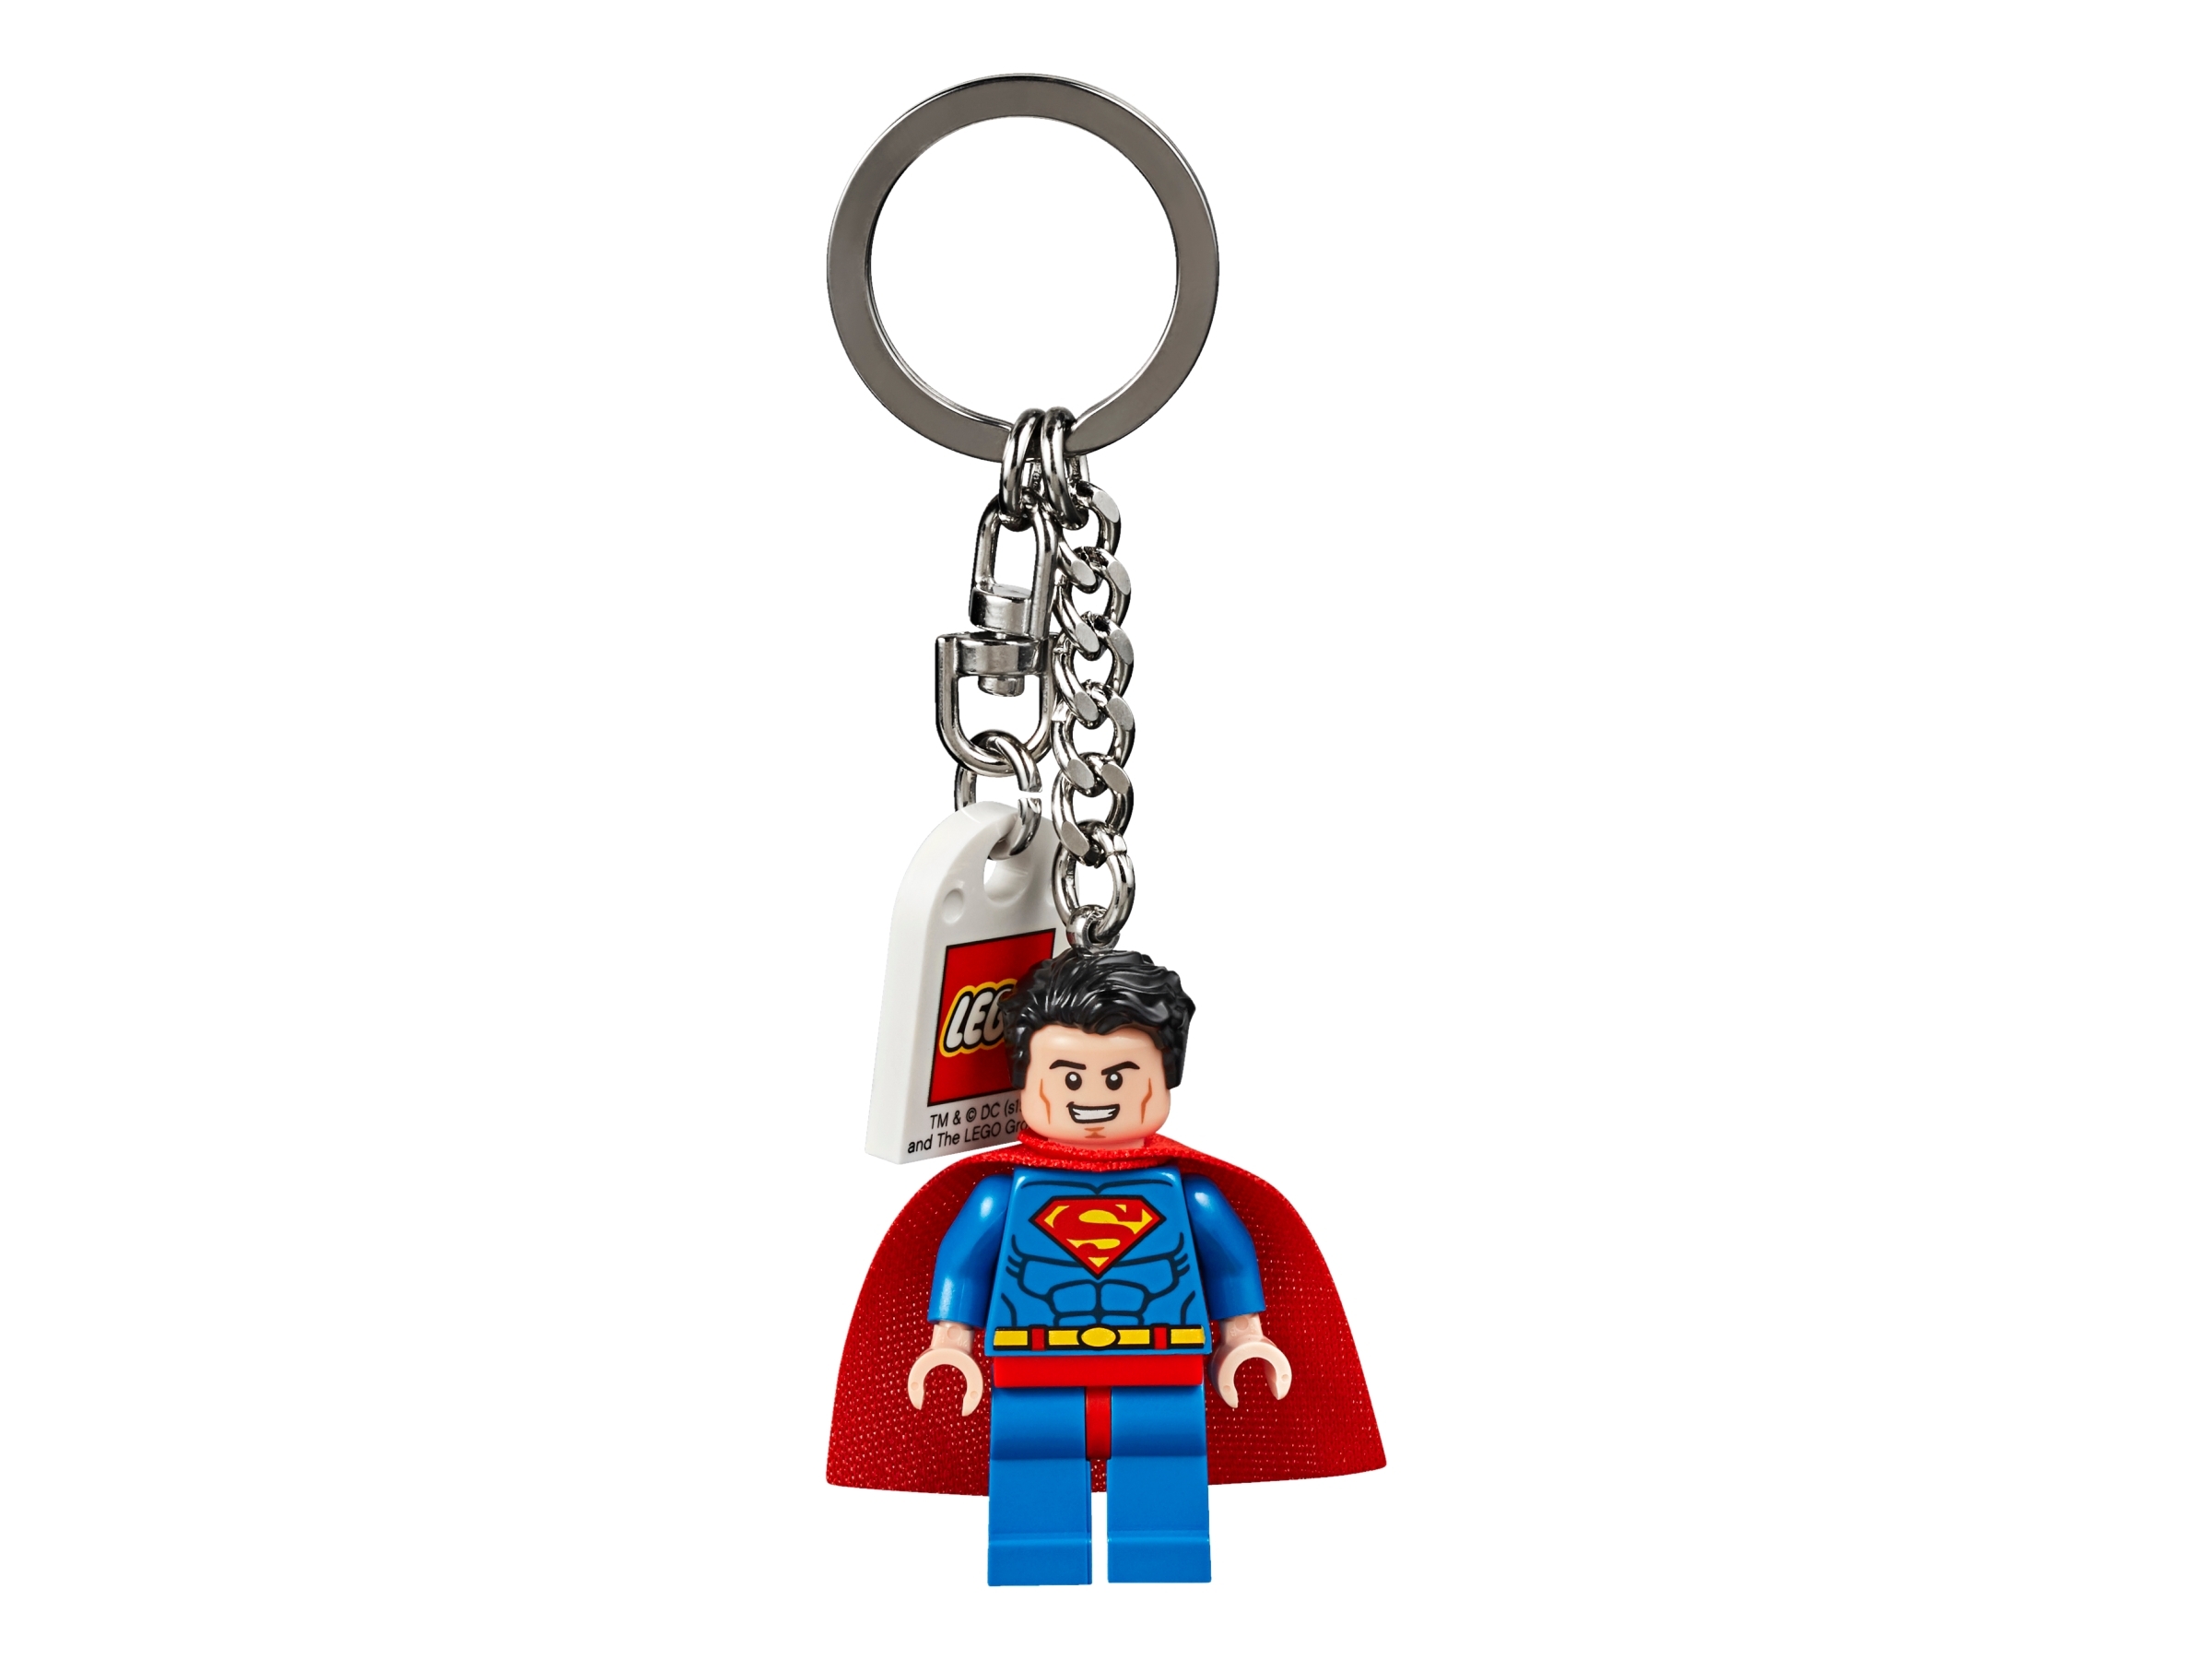 LEGO 853433 DC COMICS SUPER HEROES WONDER WOMAN MINIFIGURE KEYCHAIN *NEW* 